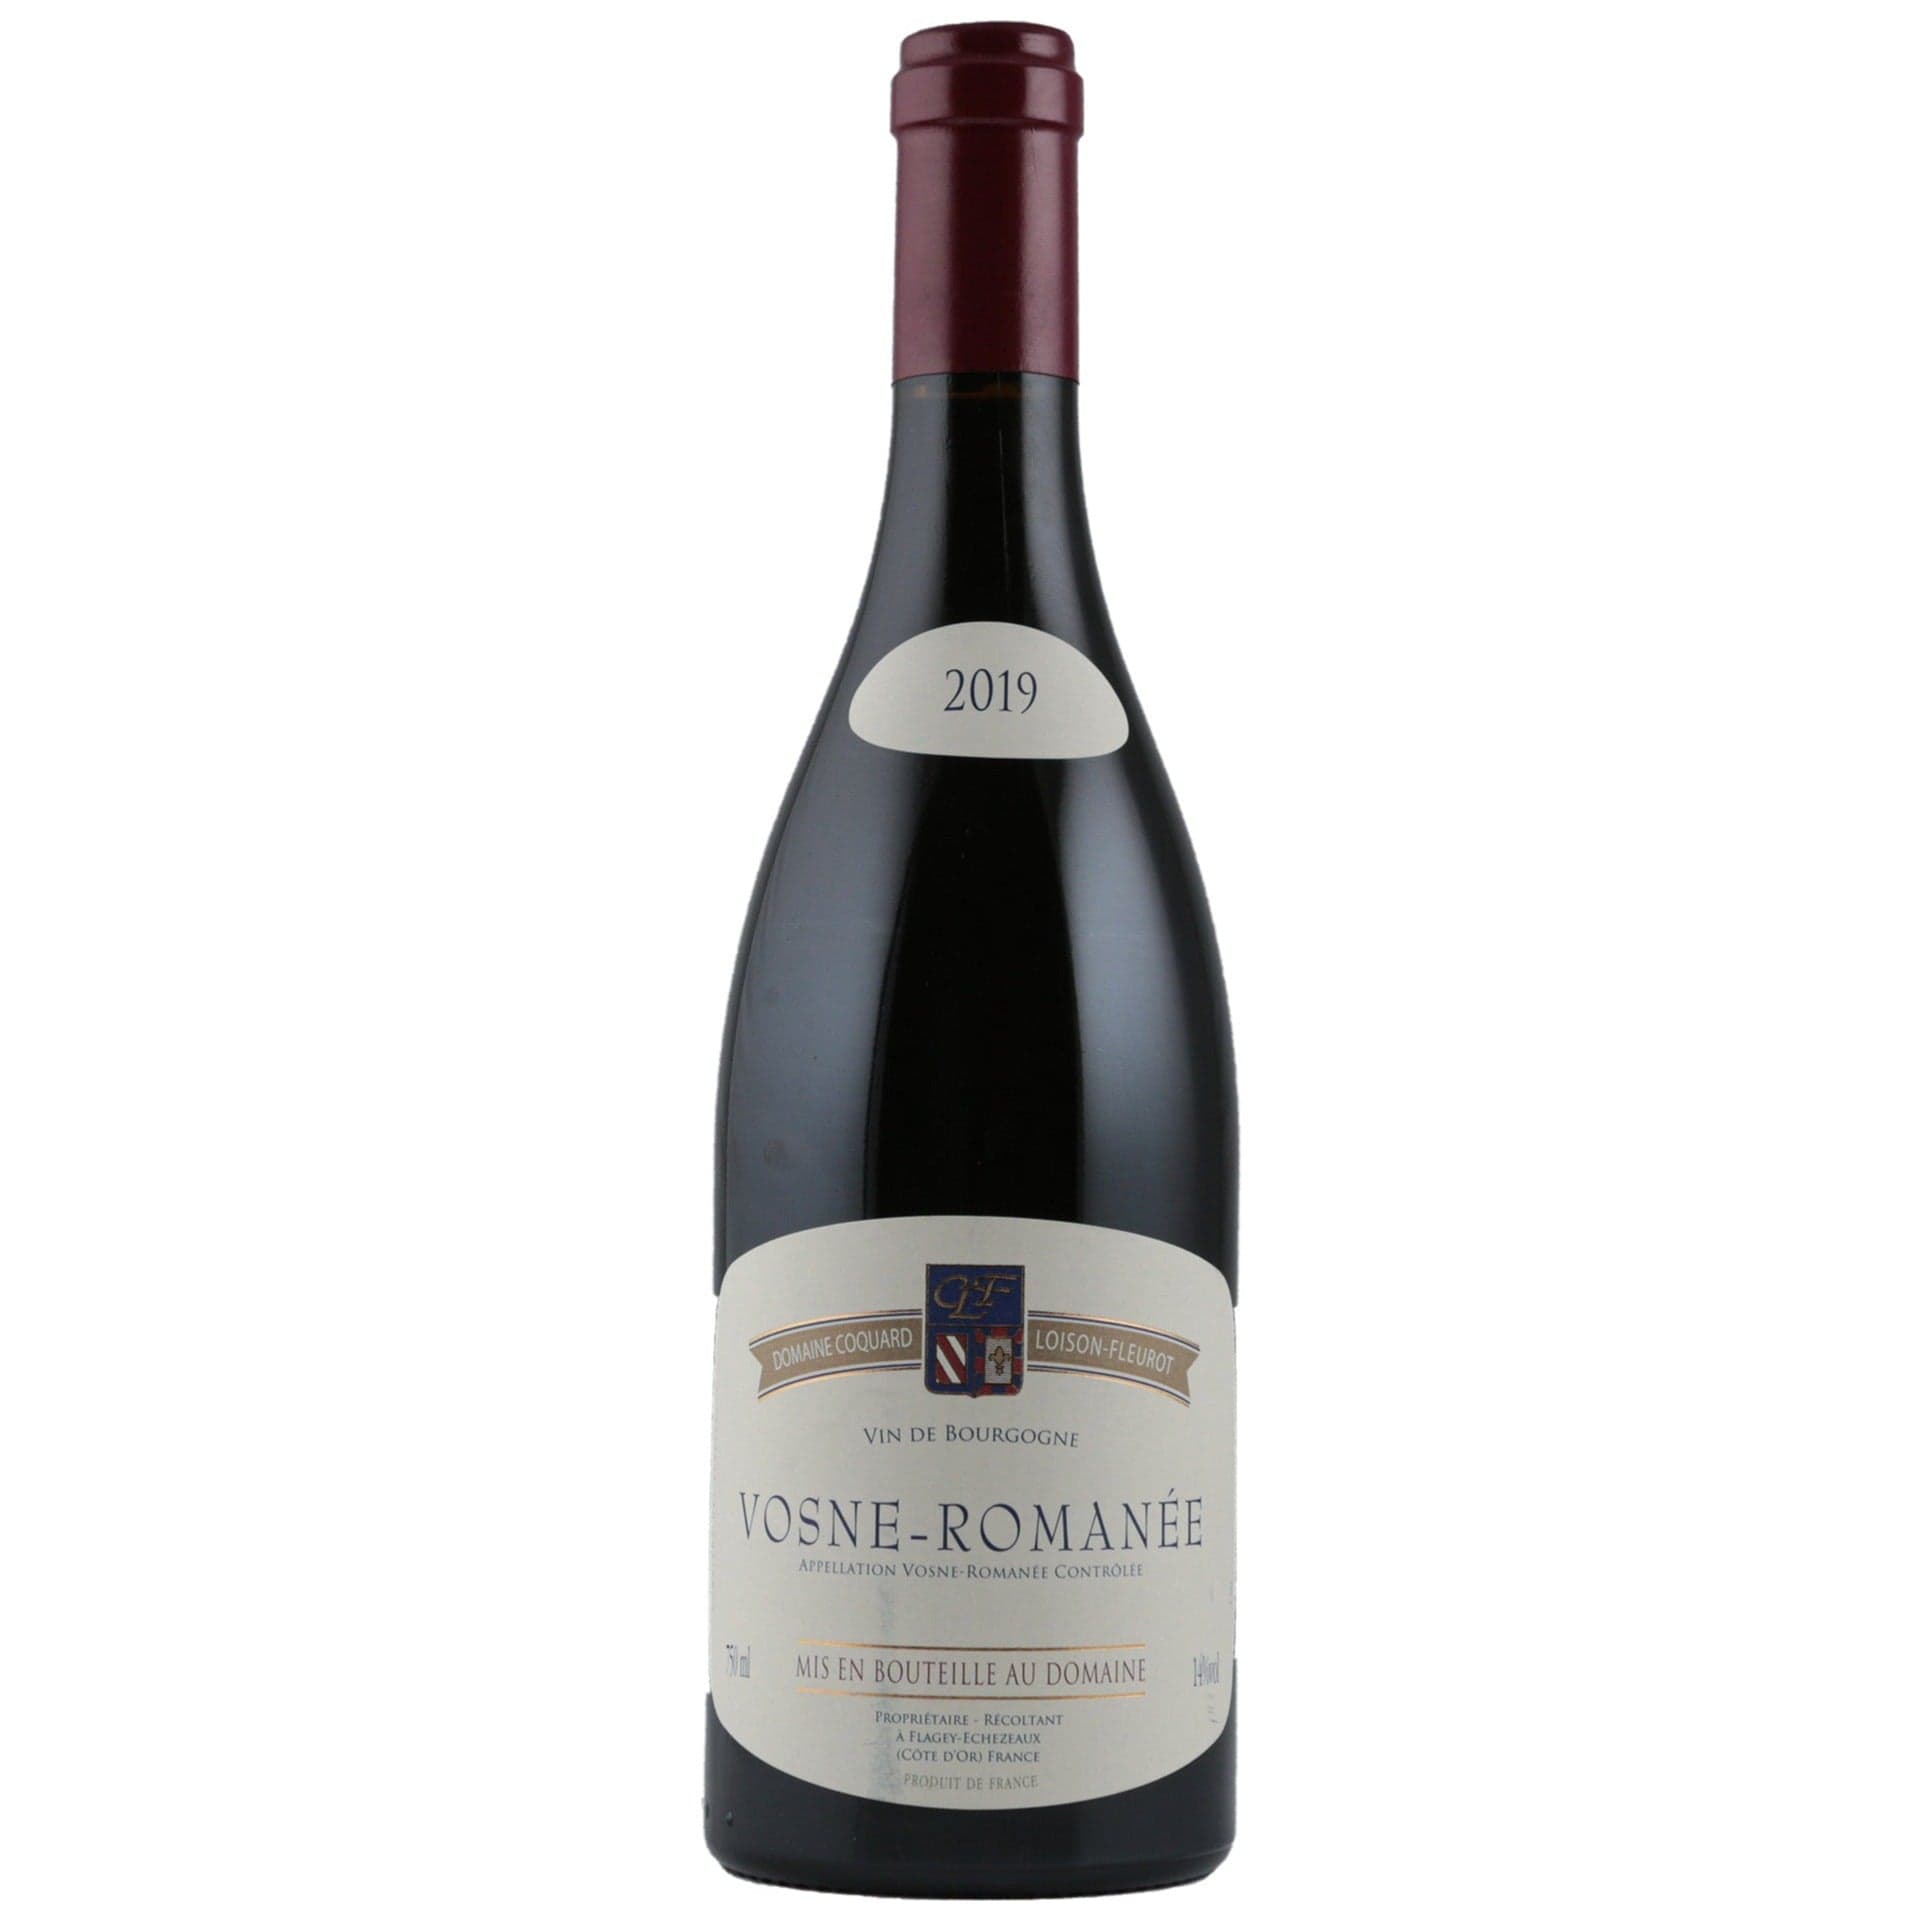 Single bottle of Red wine Dom. Coquard Loison-Fleurot, Vosne Romanée, Vosne-Romanee 2019 100% Pinot Noir